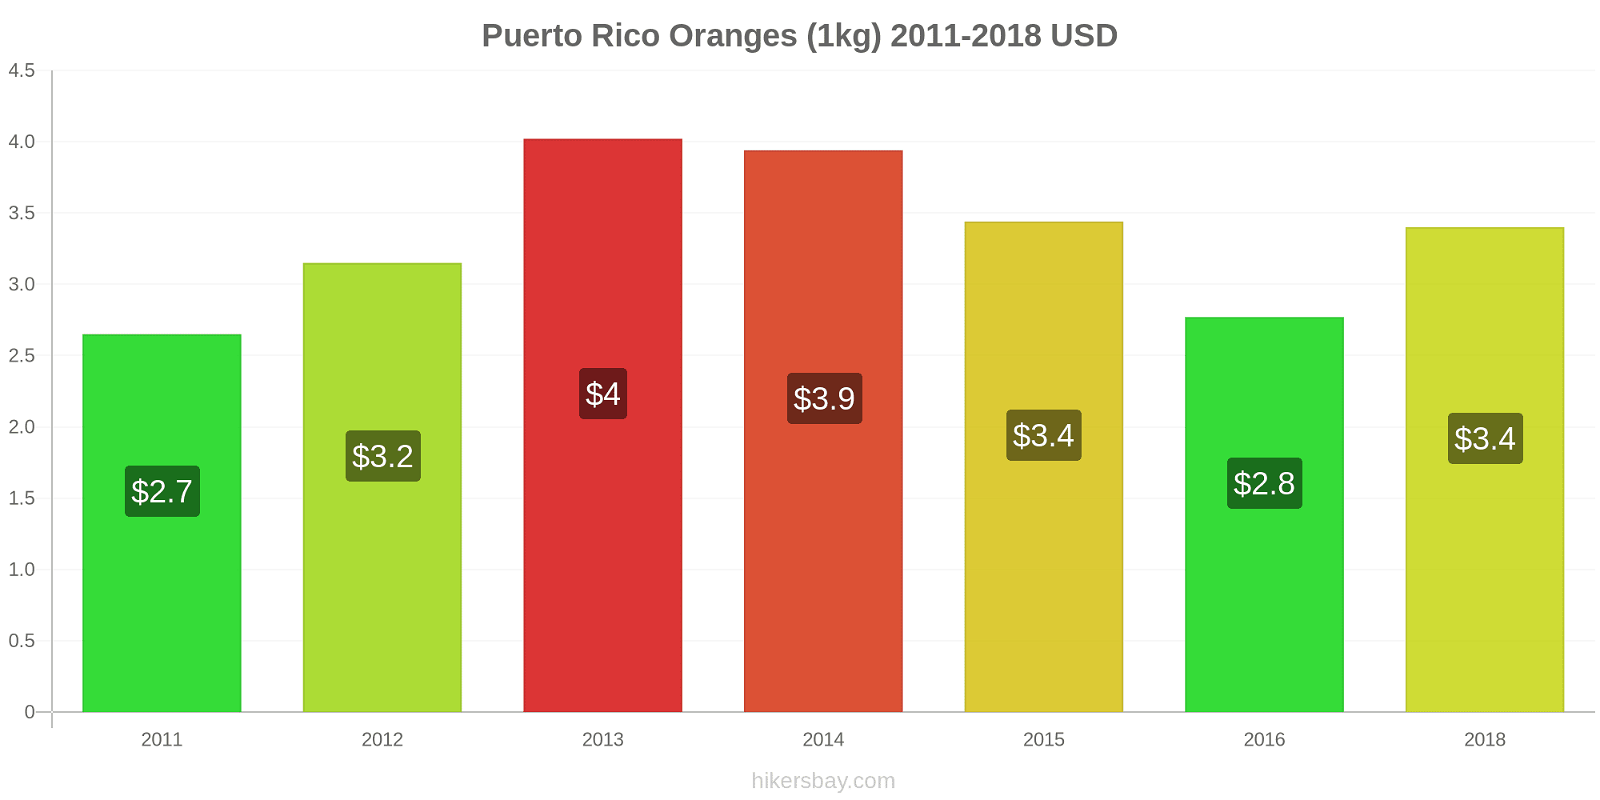 Puerto Rico price changes Oranges (1kg) hikersbay.com